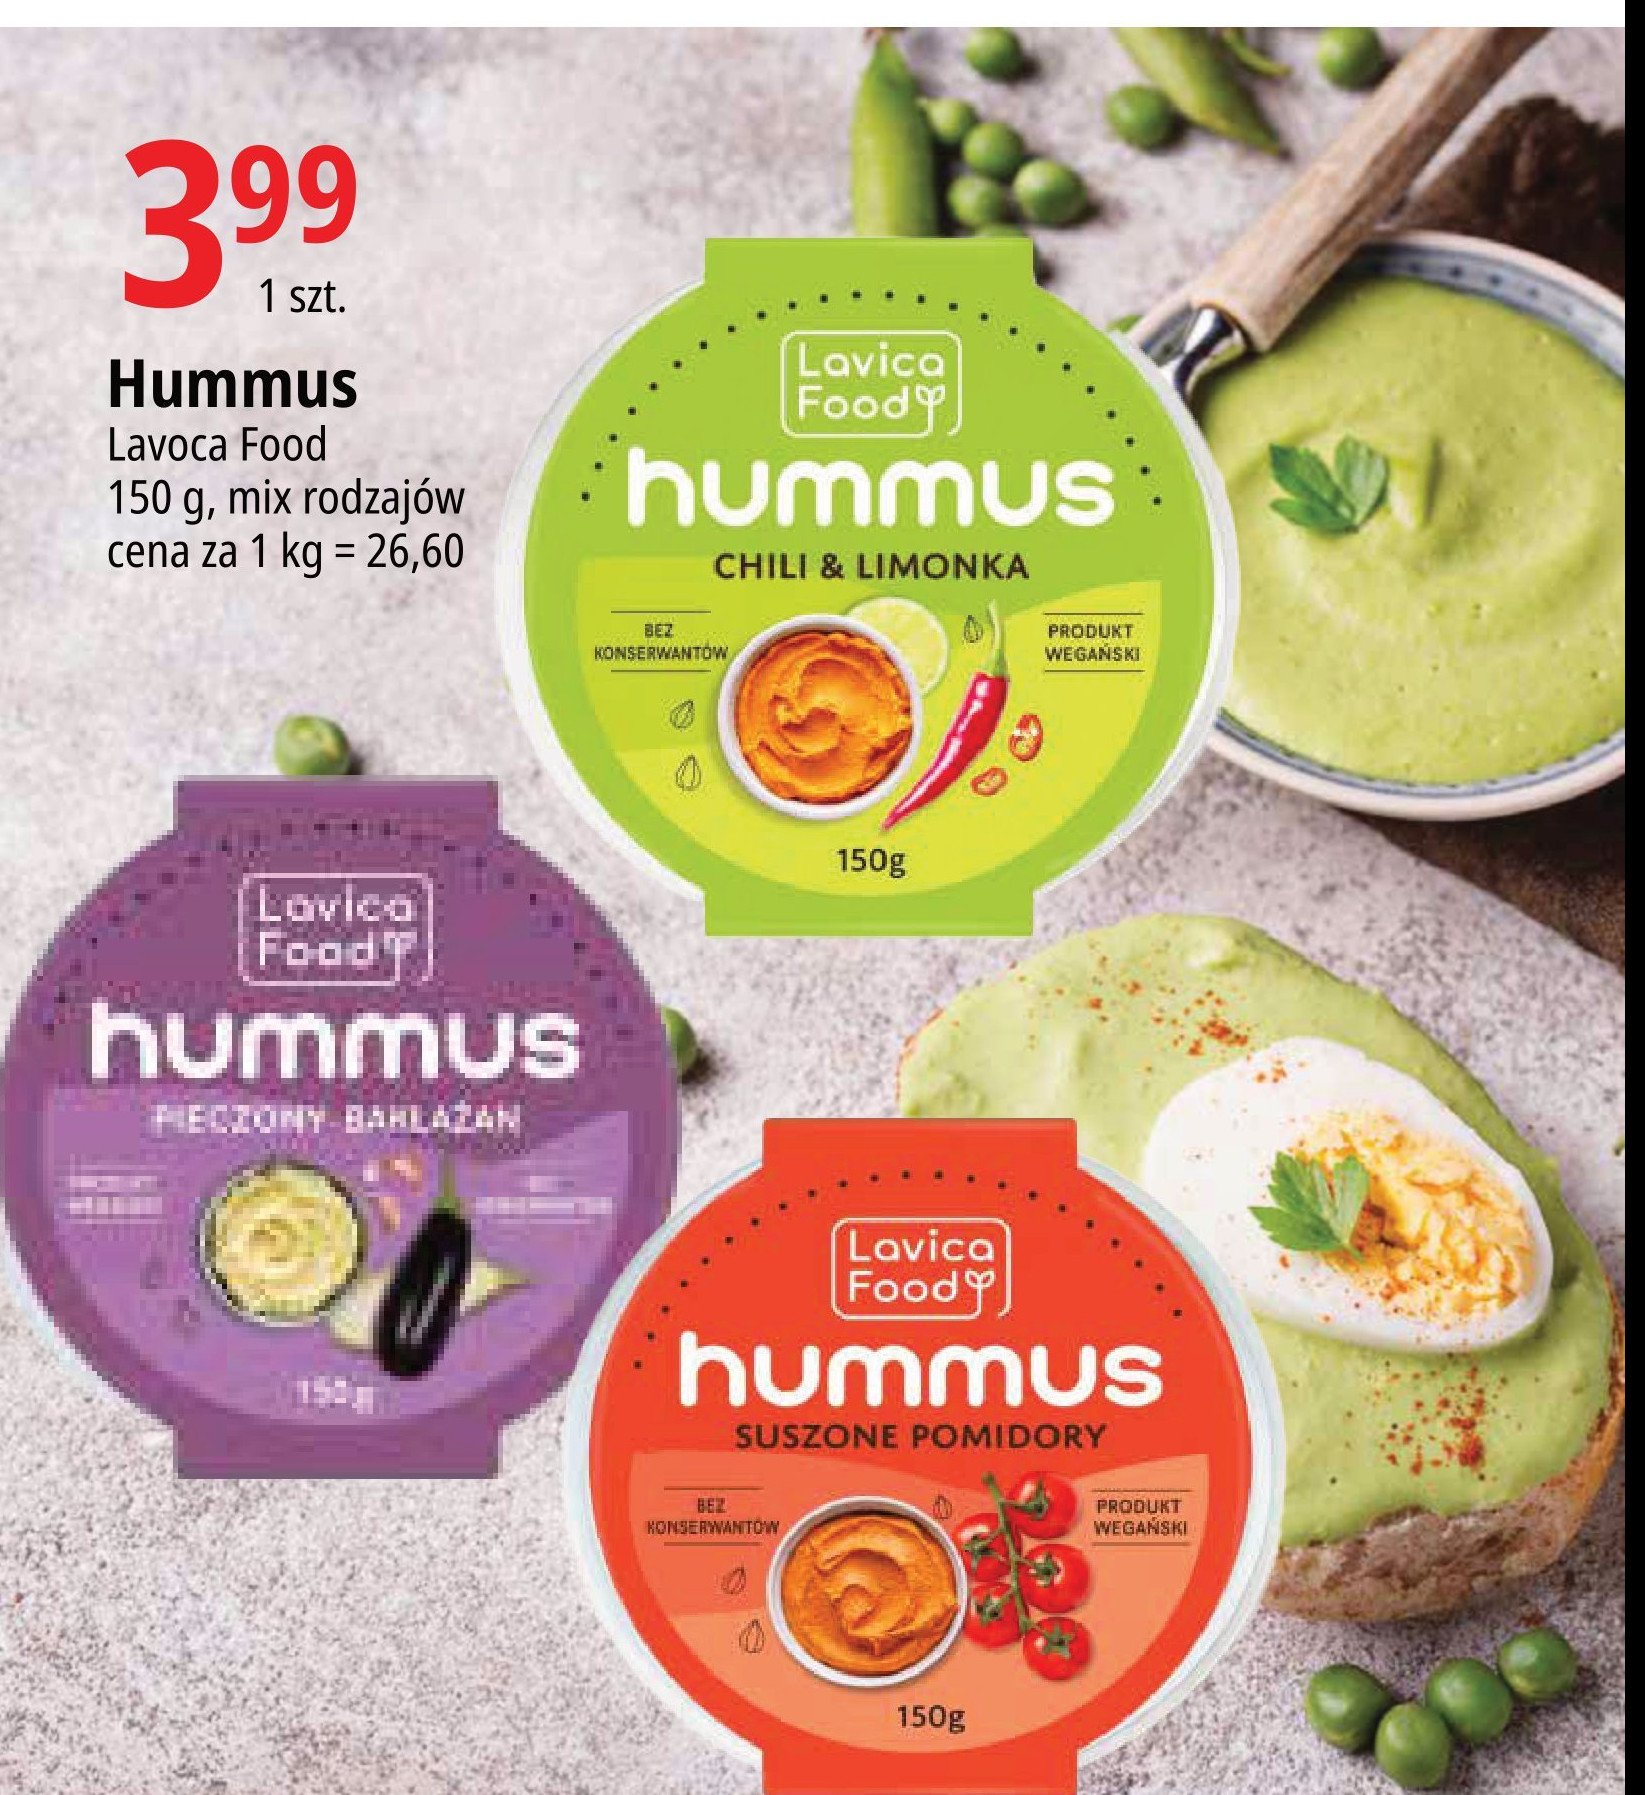 Hummus chili & limonka promocja